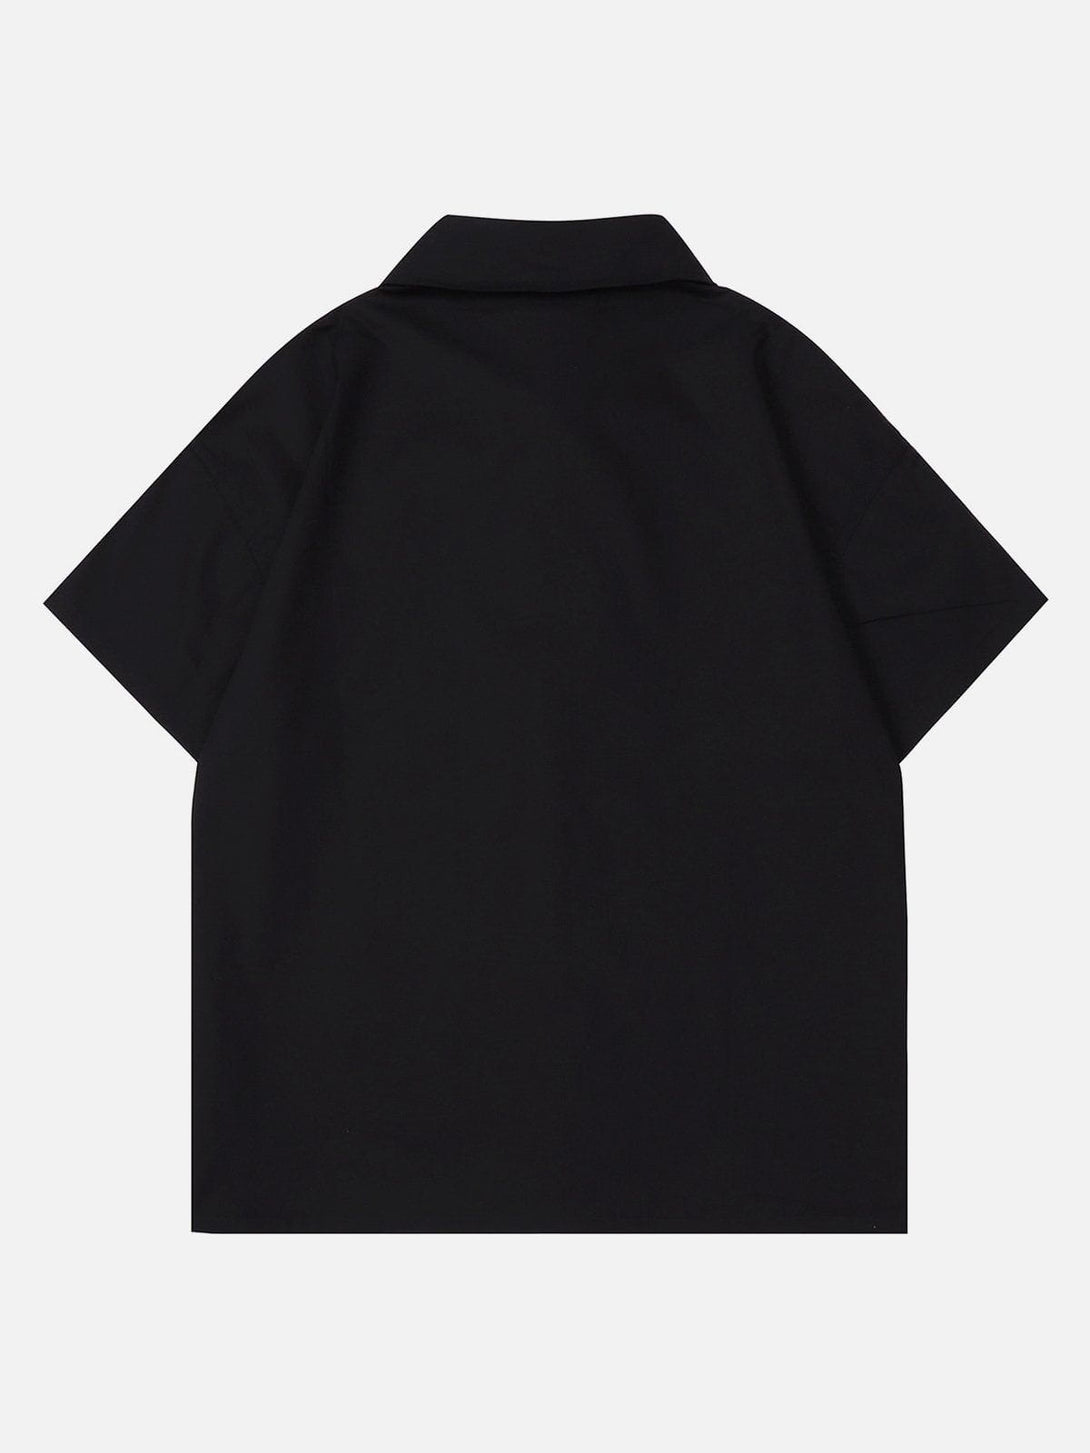 Majesda® - Tie Dye Short Sleeve Shirt outfit ideas streetwear fashion